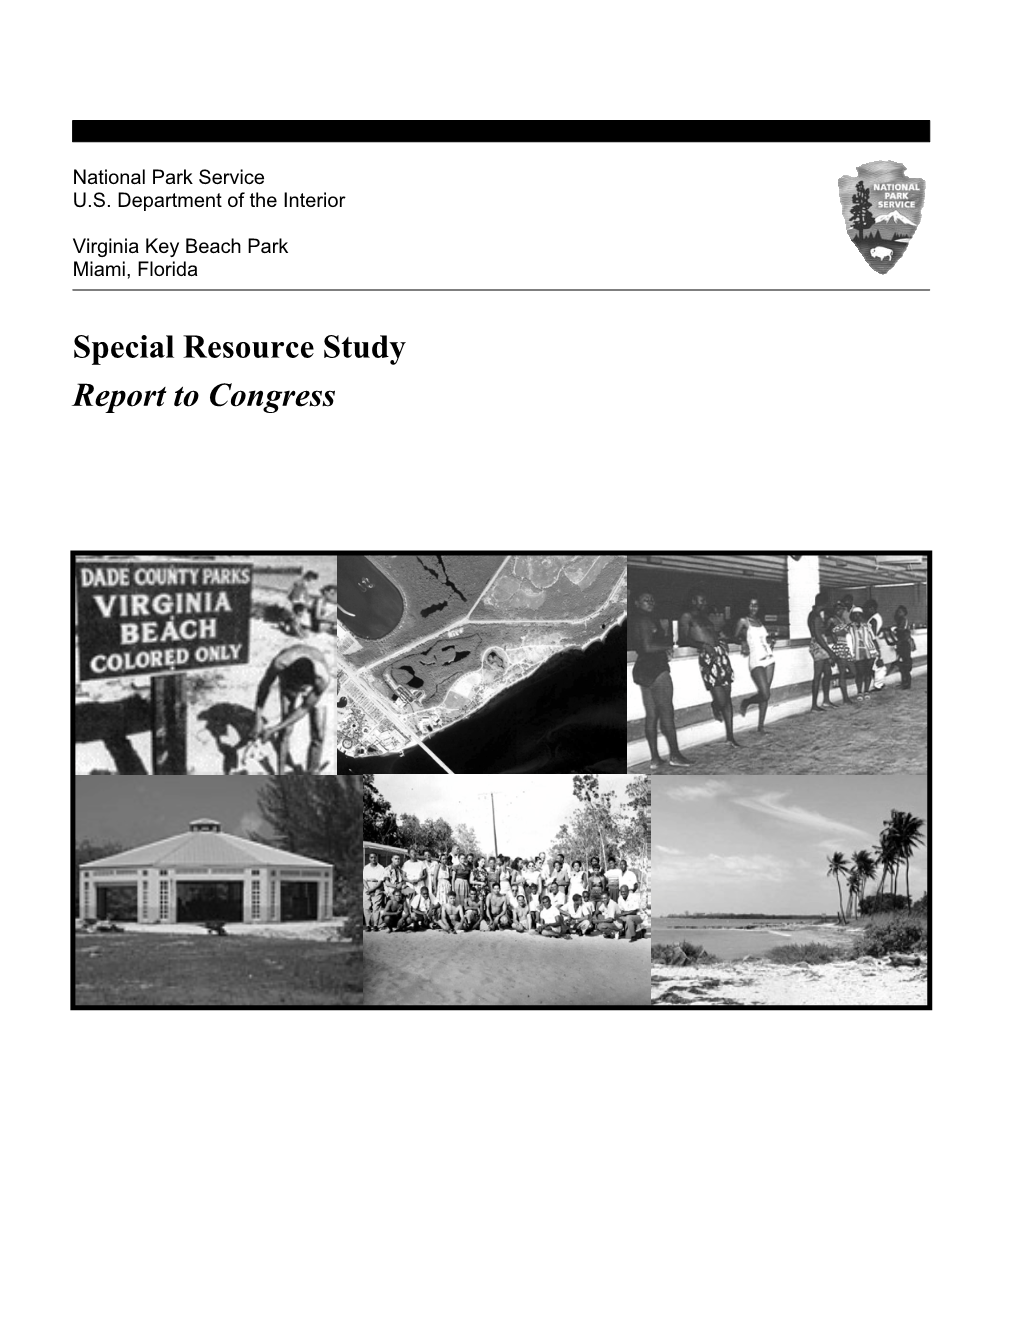 Virginia Key Beach Park Special Resource Study Report to Congress